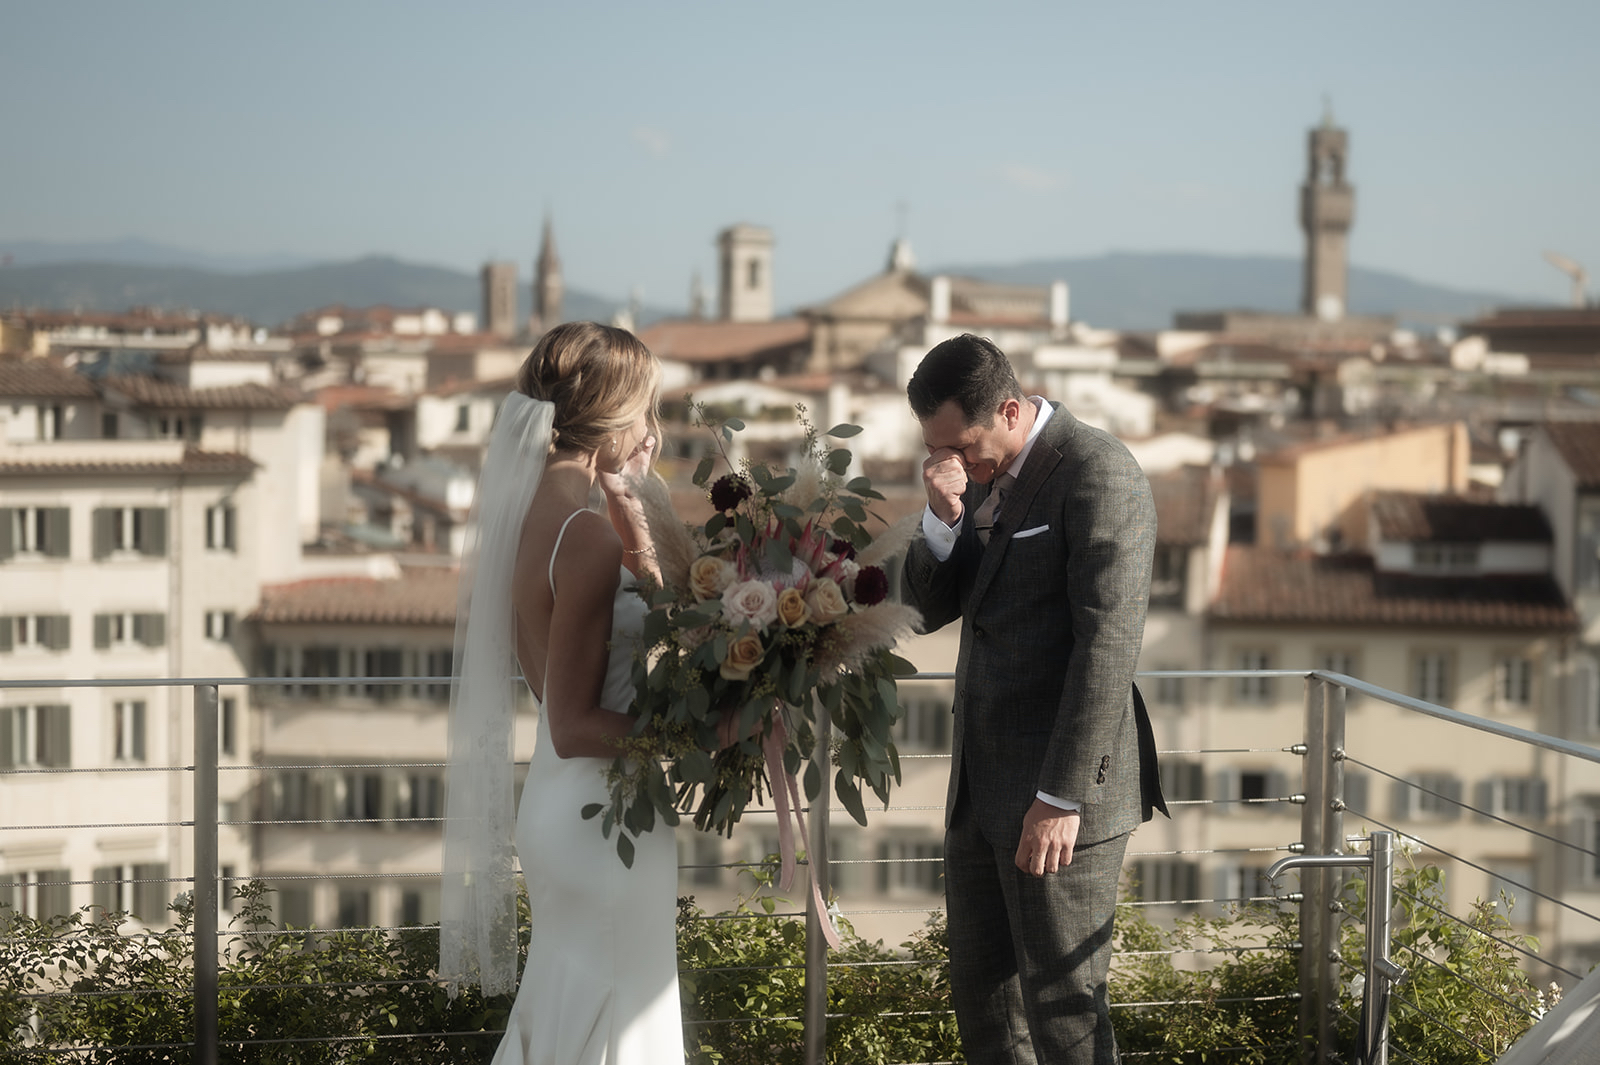 wedding-flowers-in-tuscany